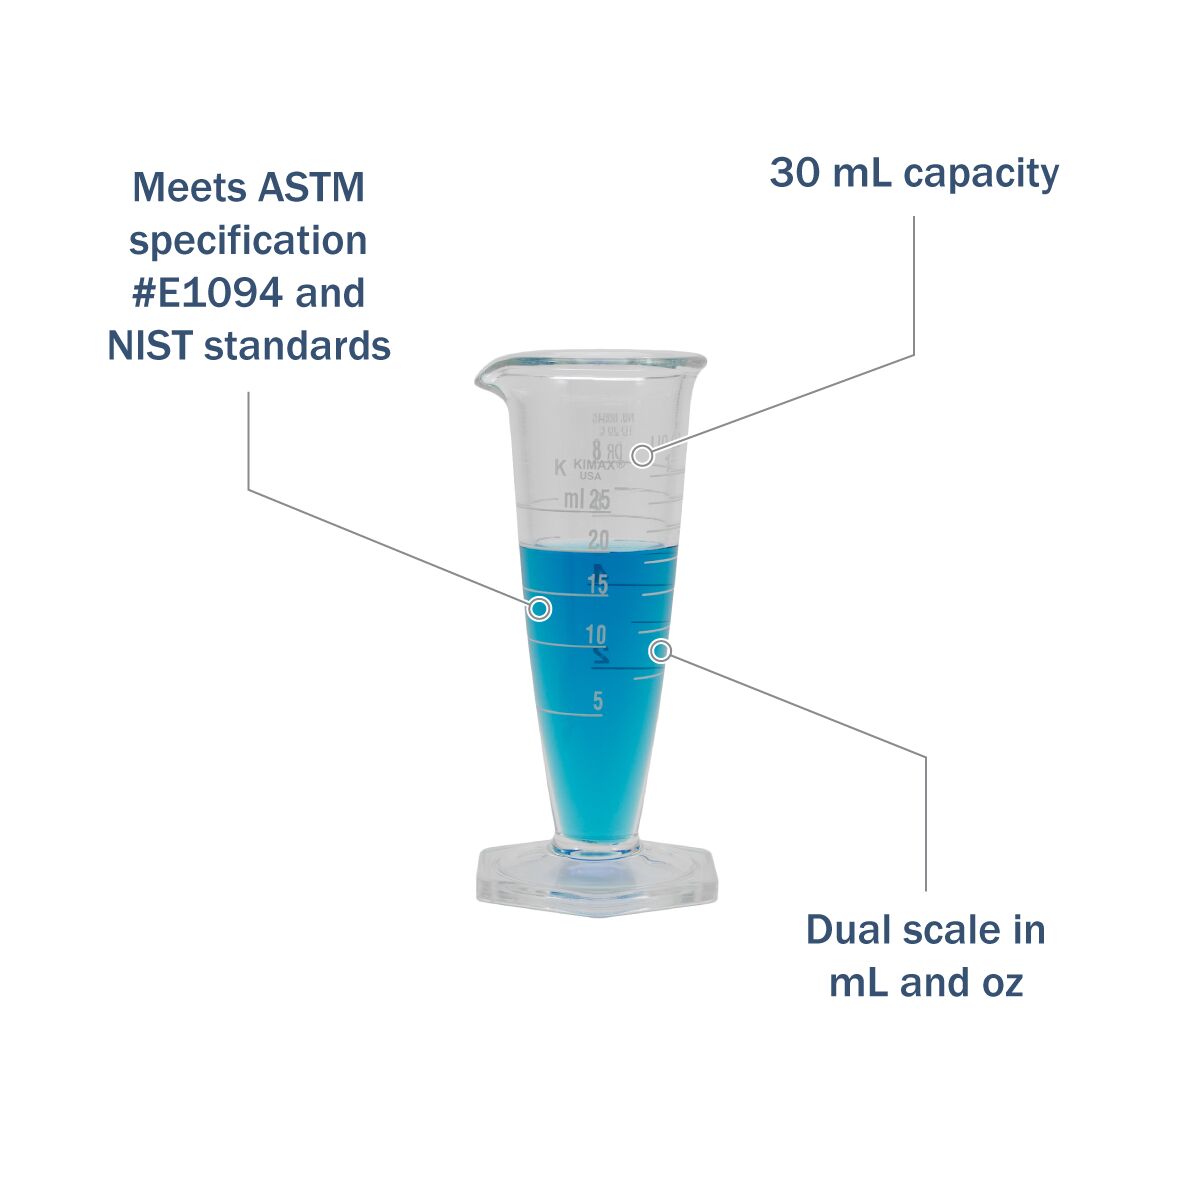 Kimax® Glass Pharmaceutical Dual-Scale Graduates 30 mL features